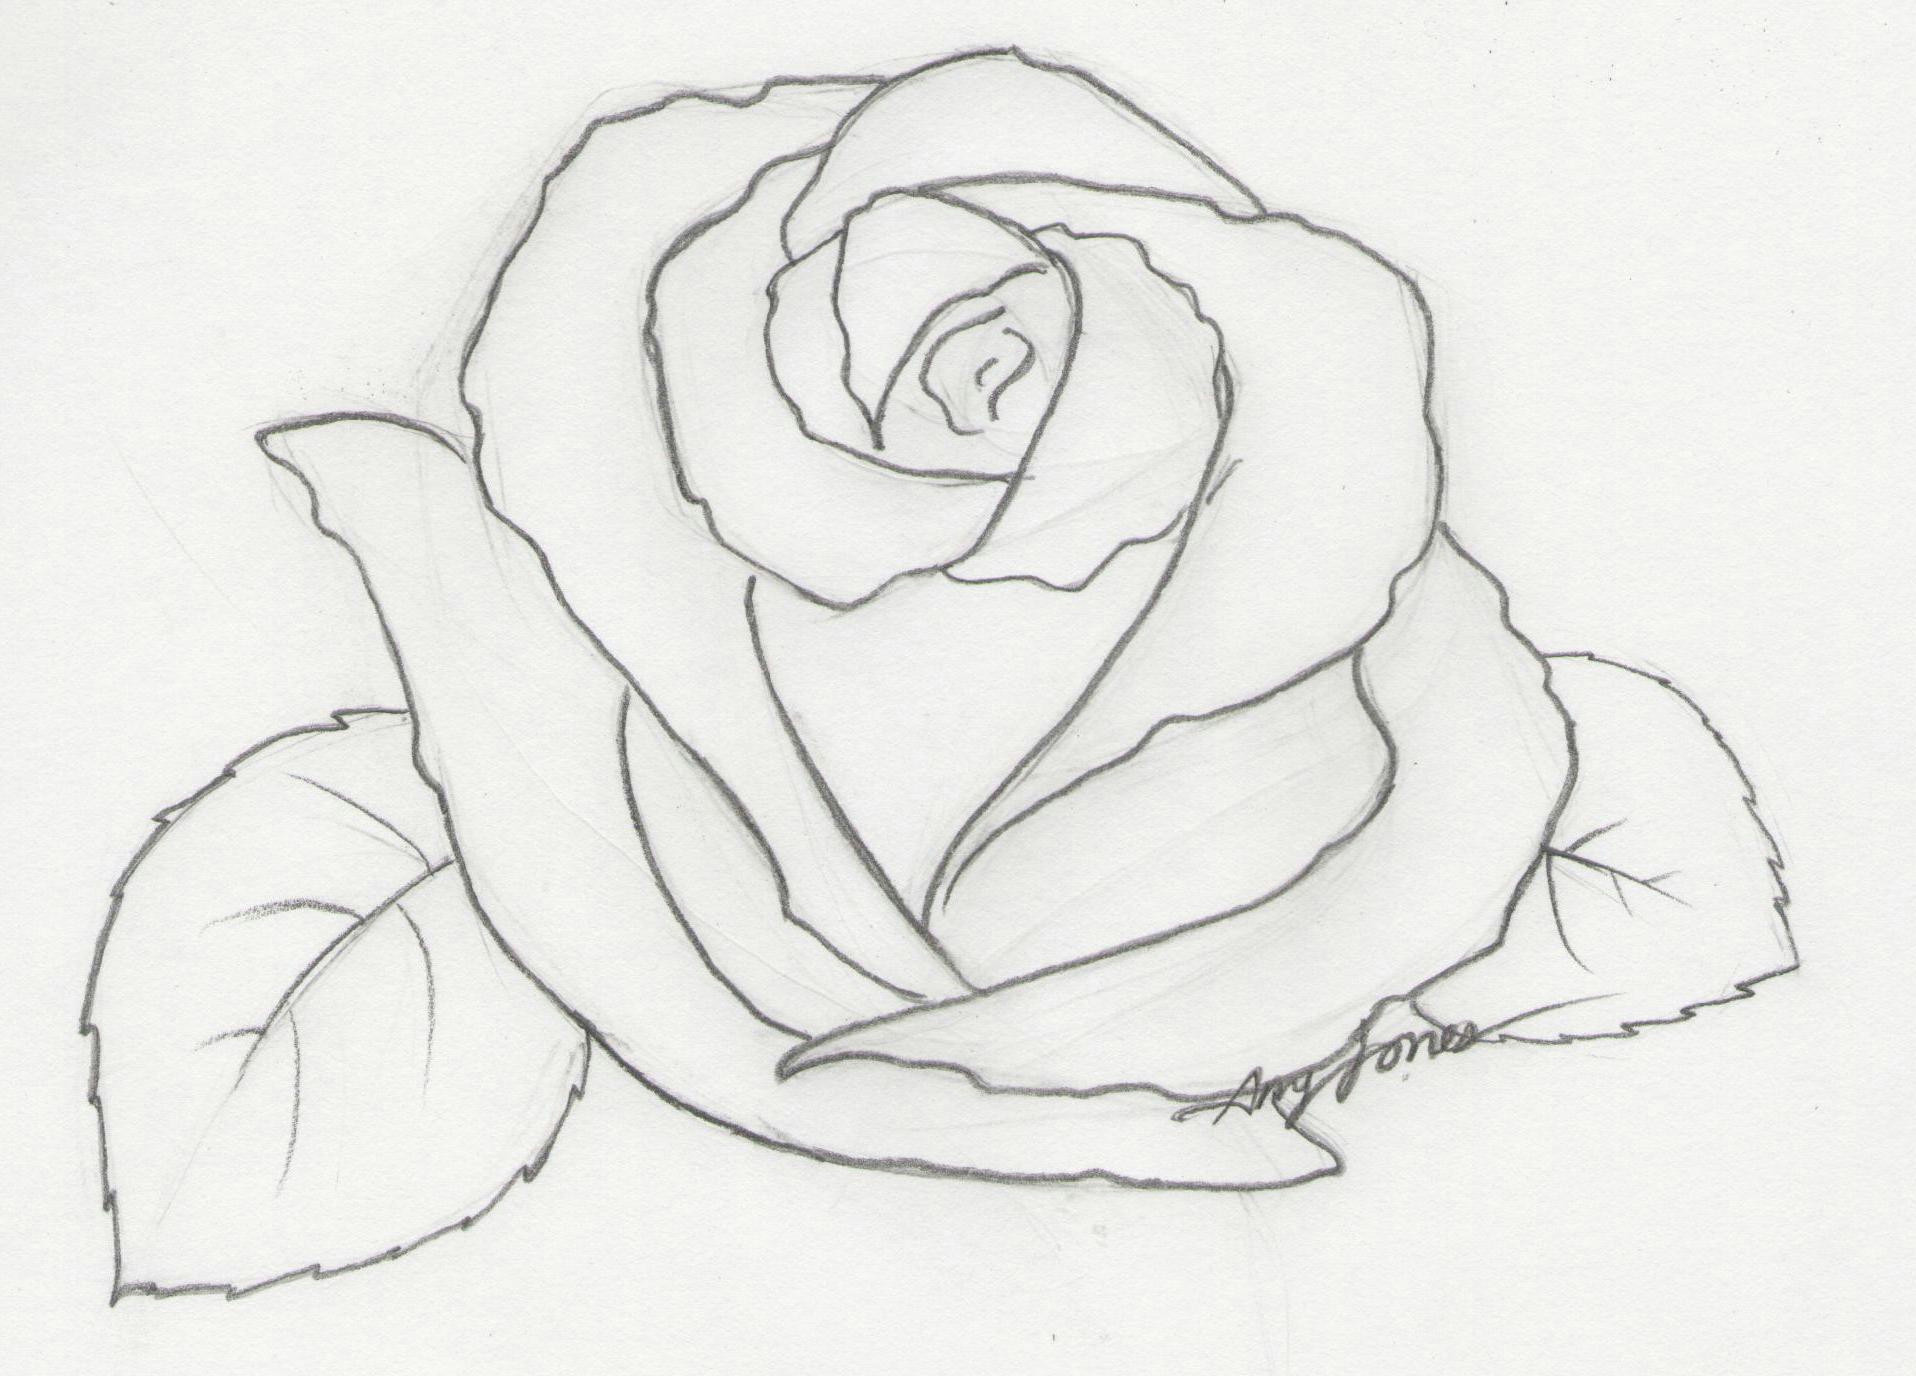 roses drawings